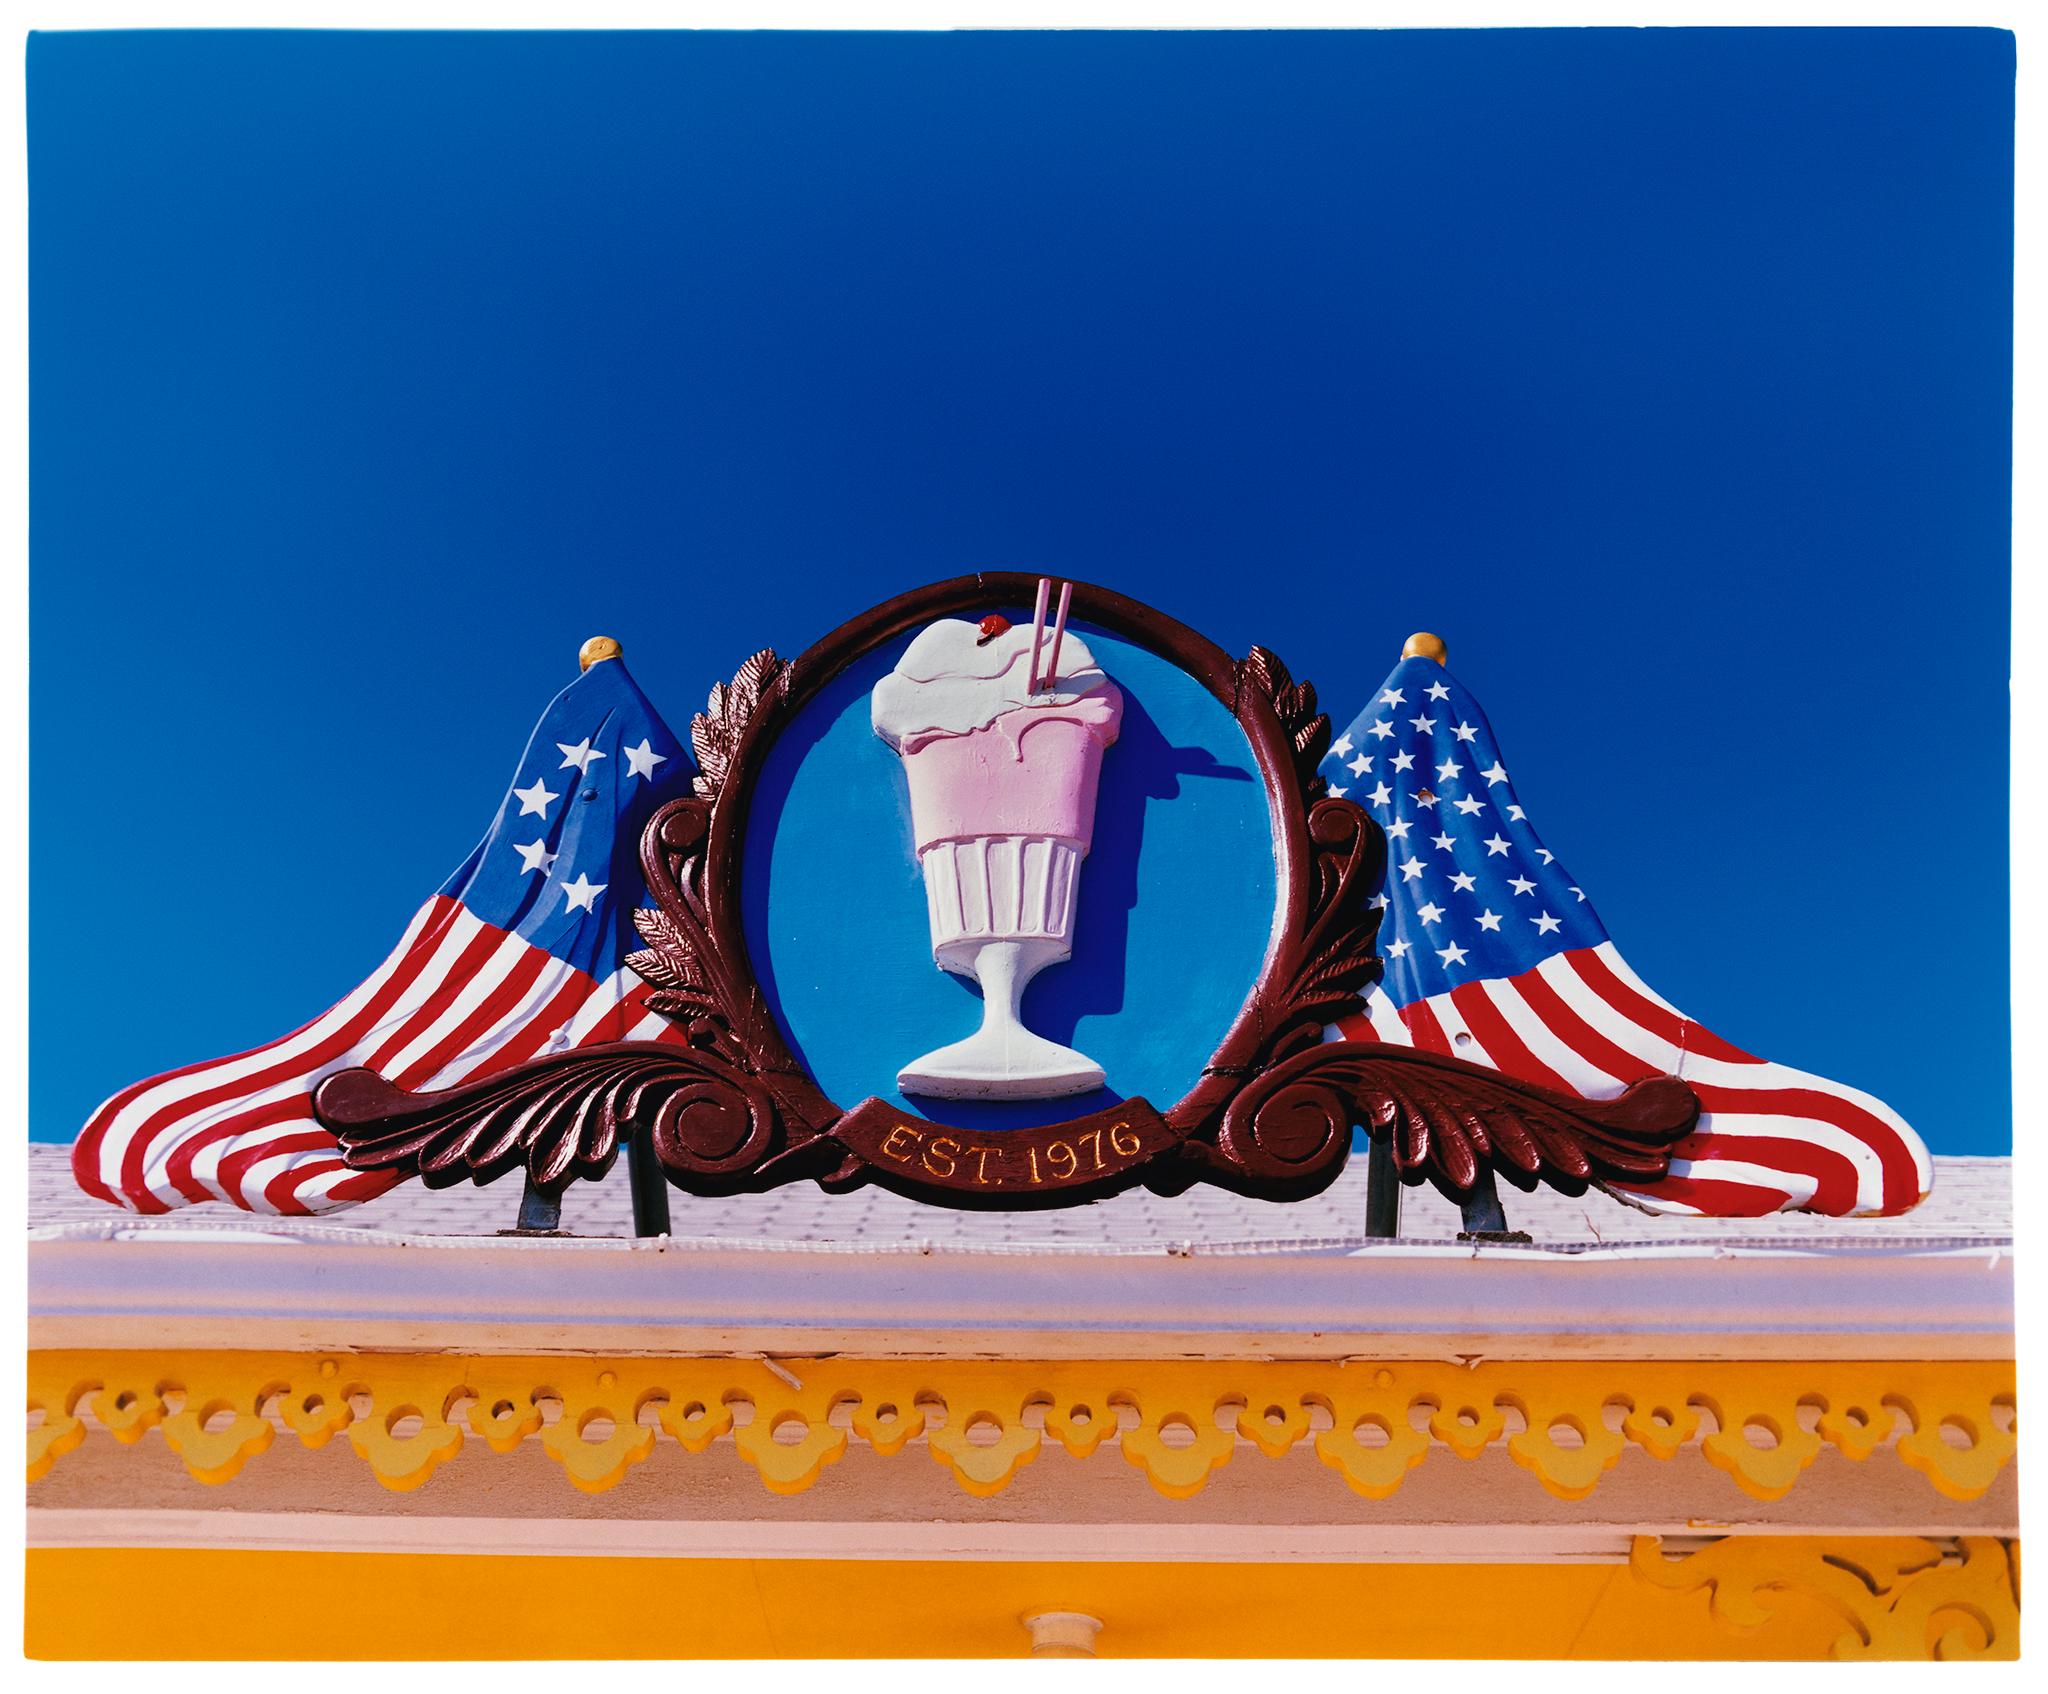 Milkshake Parlour, Wildwood, New Jersey - American Sign Color Photograph